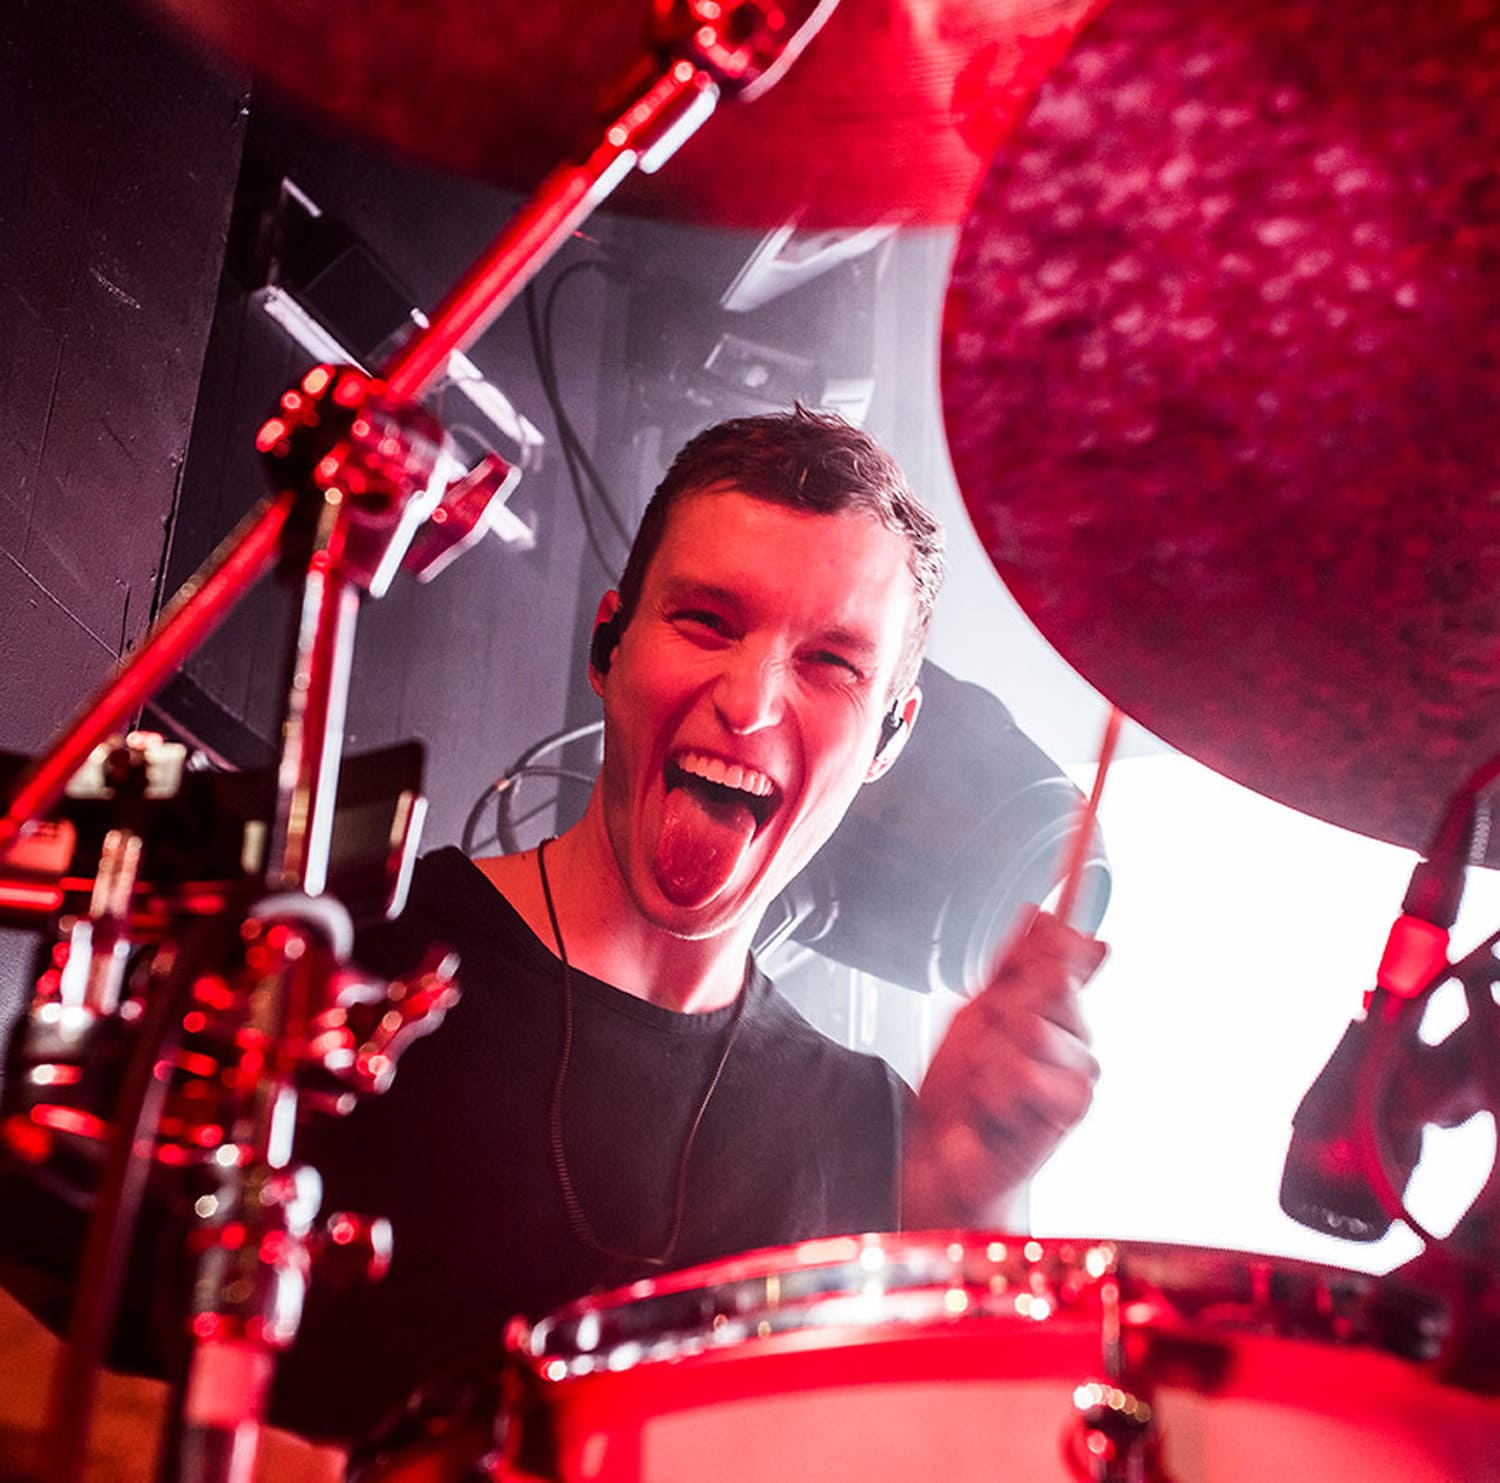 Tobias Urbanczyk Drummer of Sabrina Carpenter and playback Tech for Billie Eilish